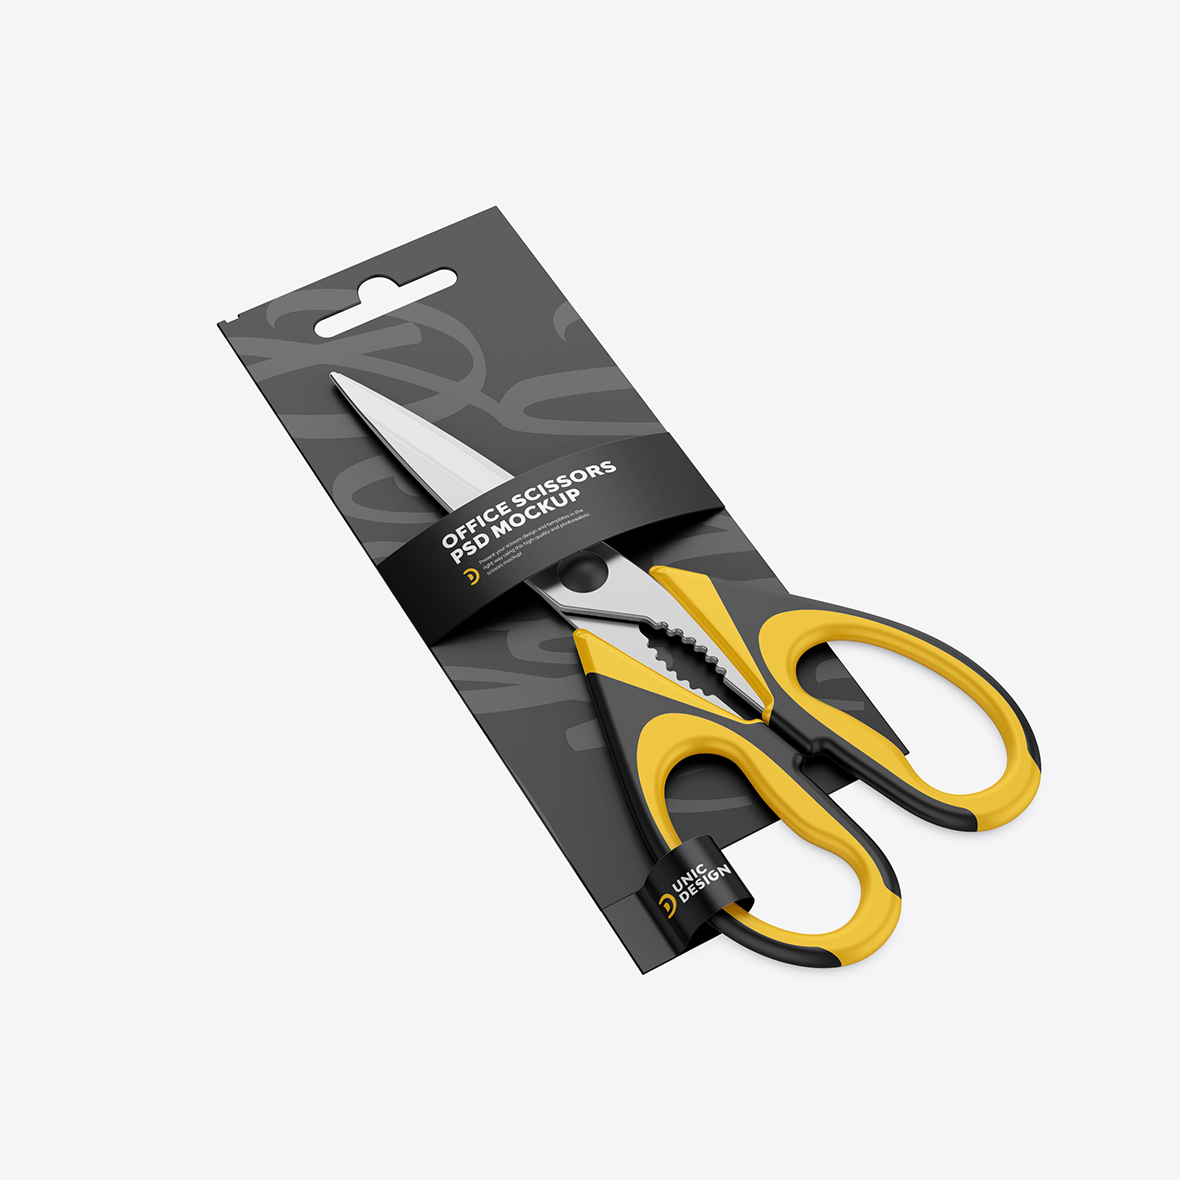 Scissors Pack Mockup